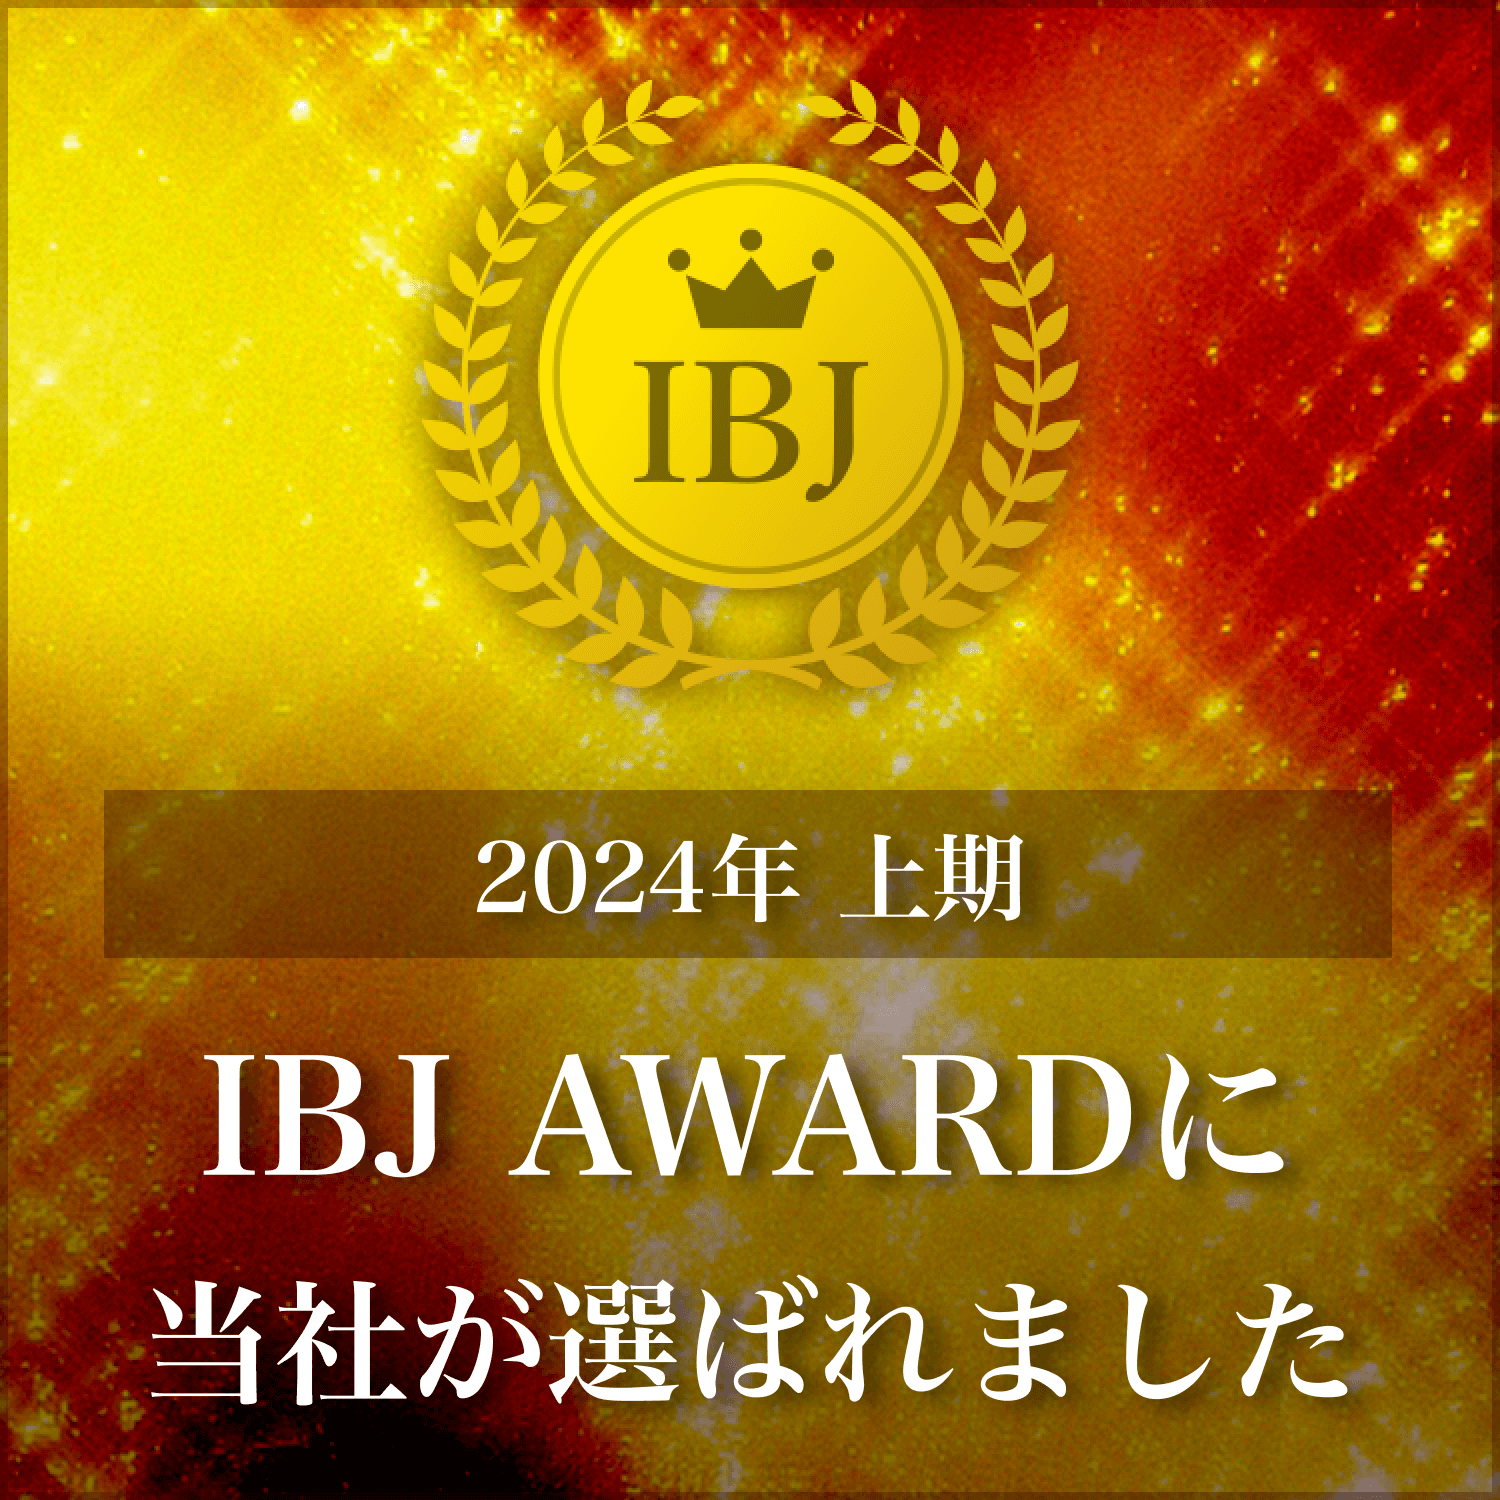 IBJ AWARD 2024 上期 受賞